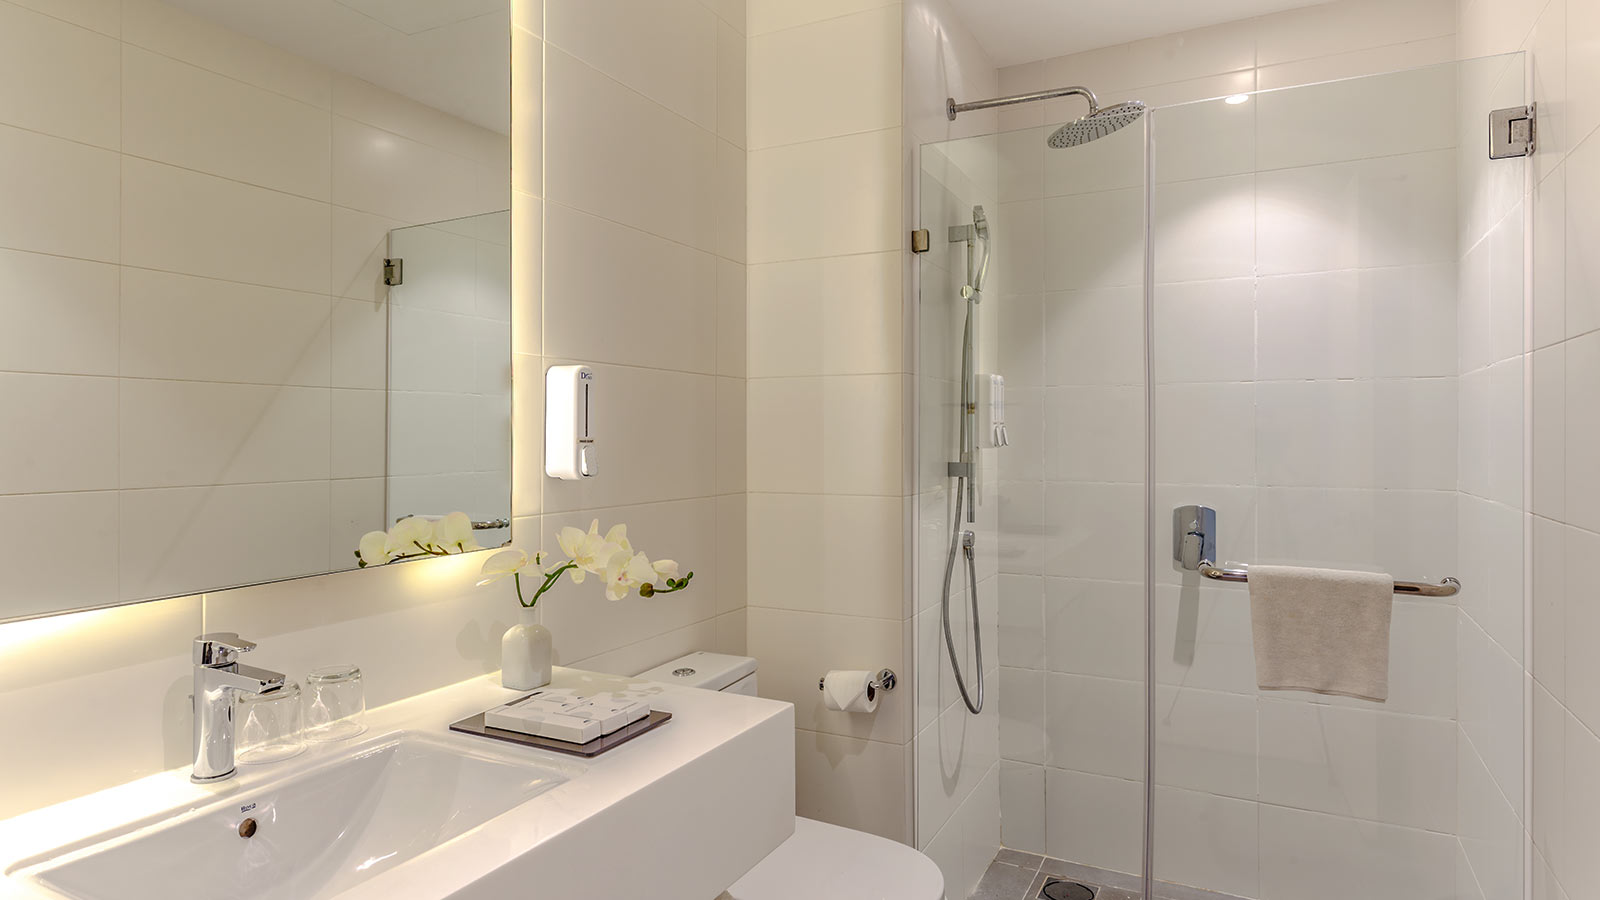 Shama Suasana Johor Bahru - Three Bedroom Suite Bathroom - Shama Suasana Johor Bahru